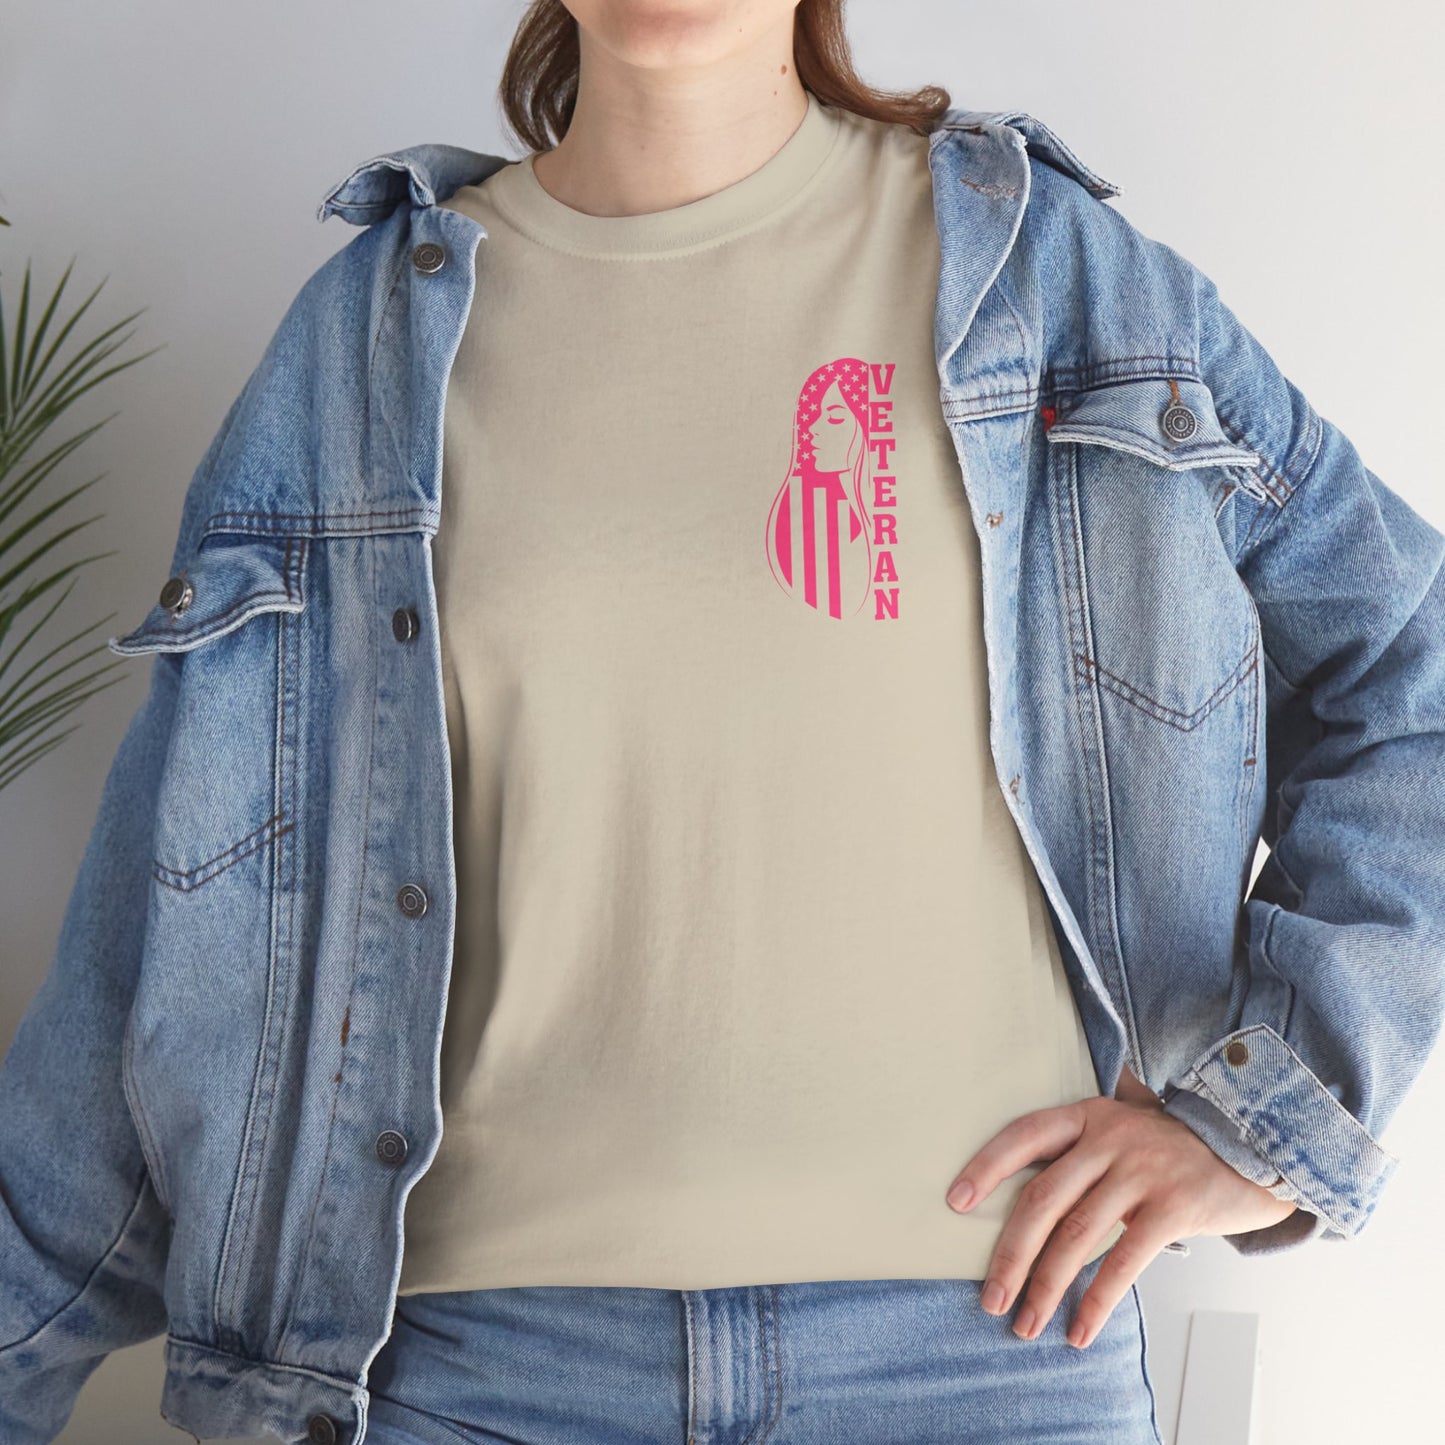 Female Veteran Tshirt - Small Left Design